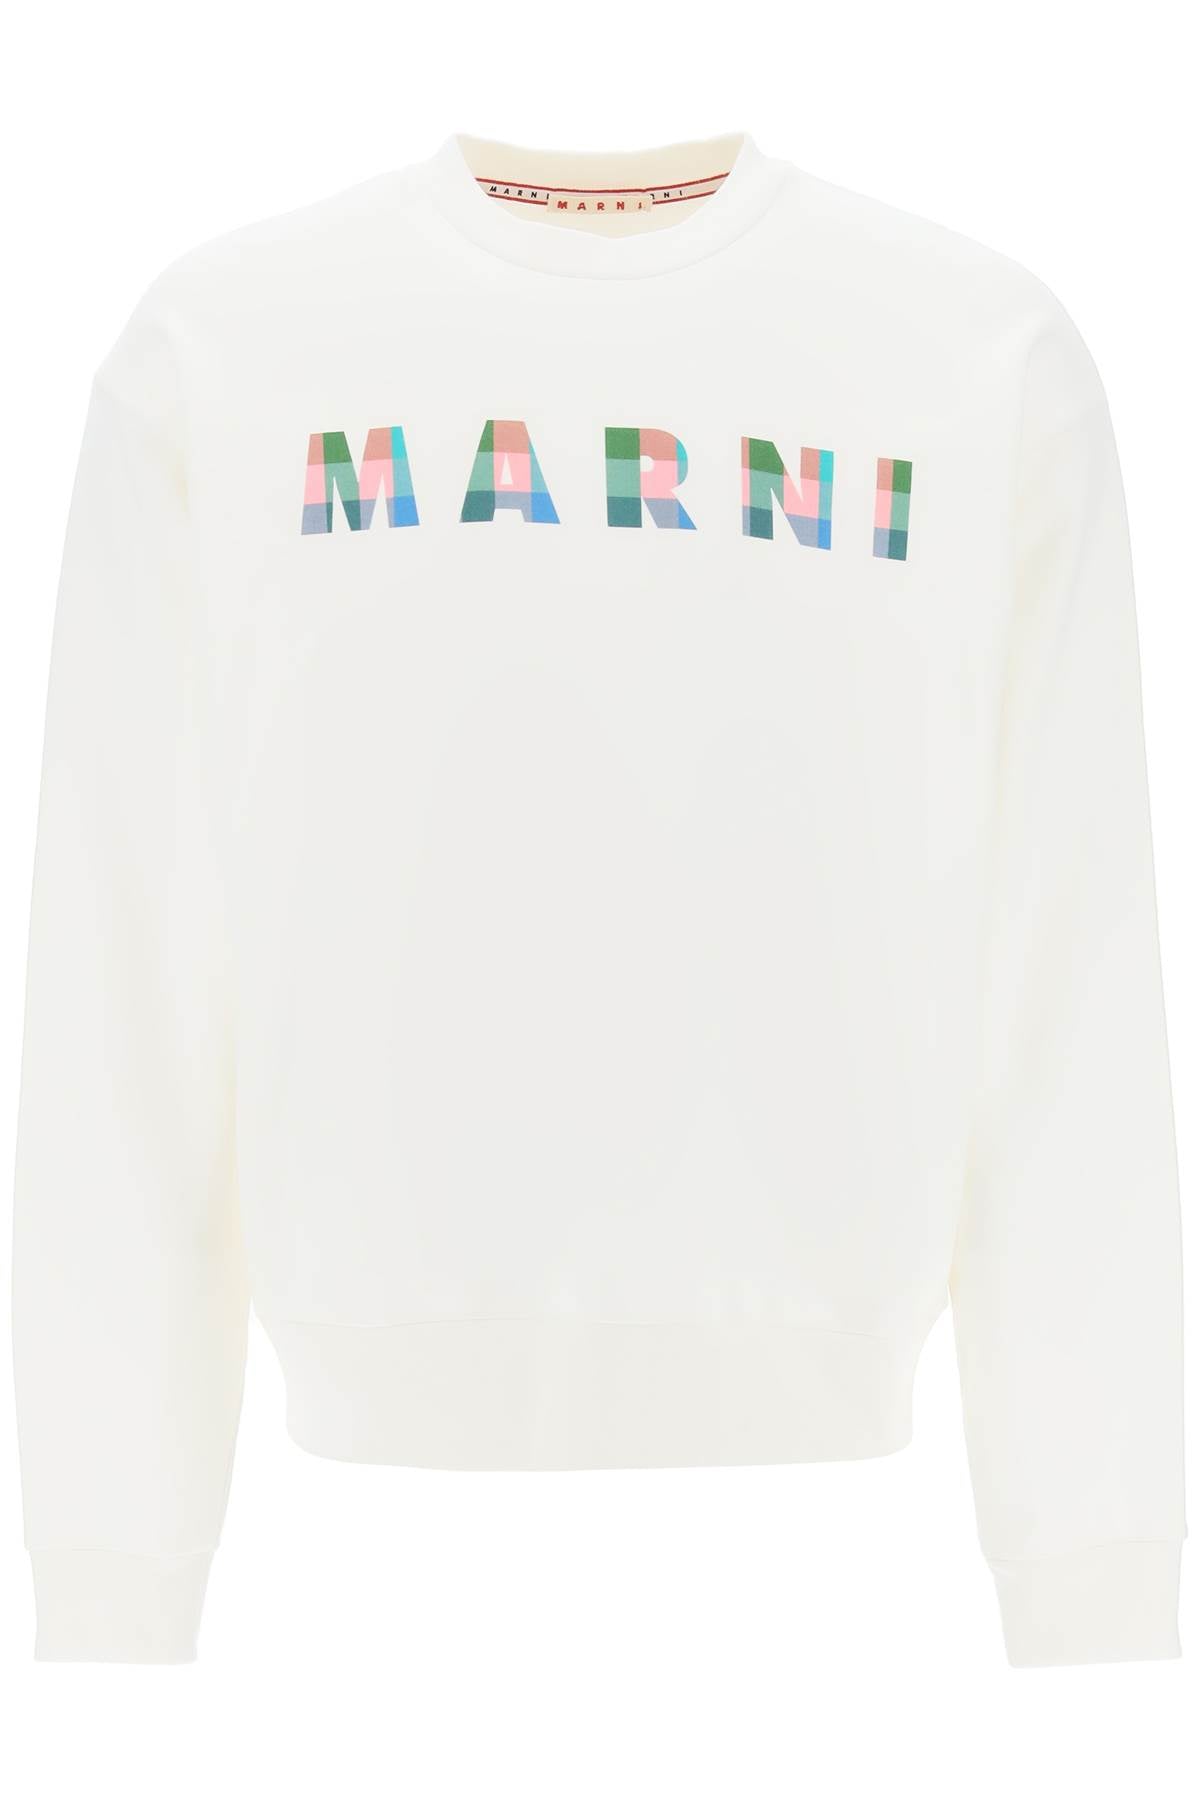 Marni sweatshirt with plaid logo FUMU0074PFUSCW62 NATURAL WHITE